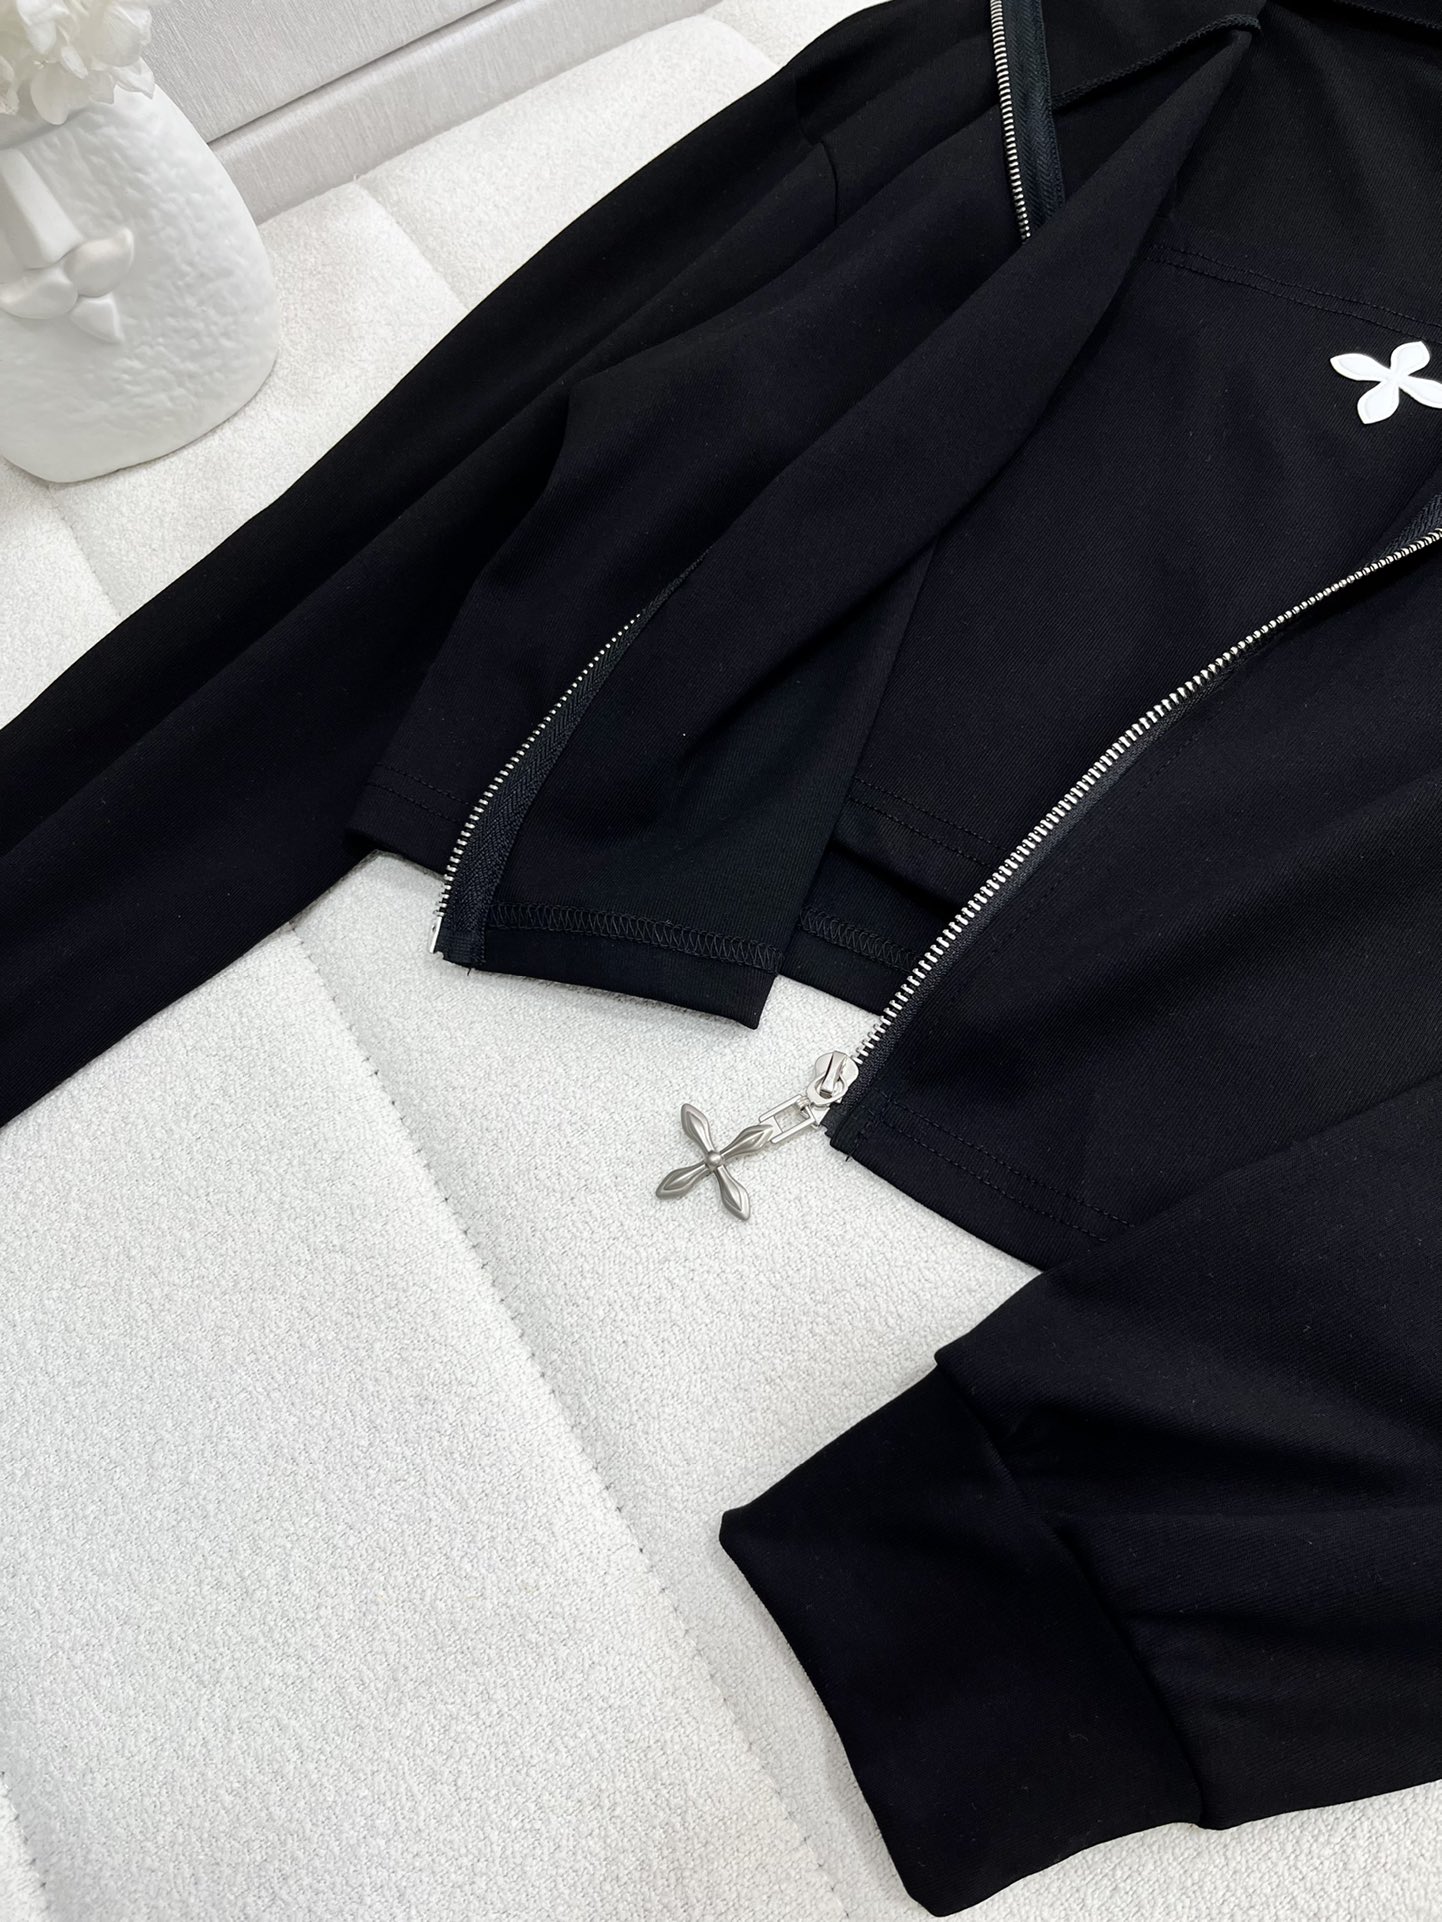 SMFKシャツ 洗い方ｎ級品 超激得新品 運動セット フード付きジャケット ショットパンツ 3点セット 人気 ブラック_5